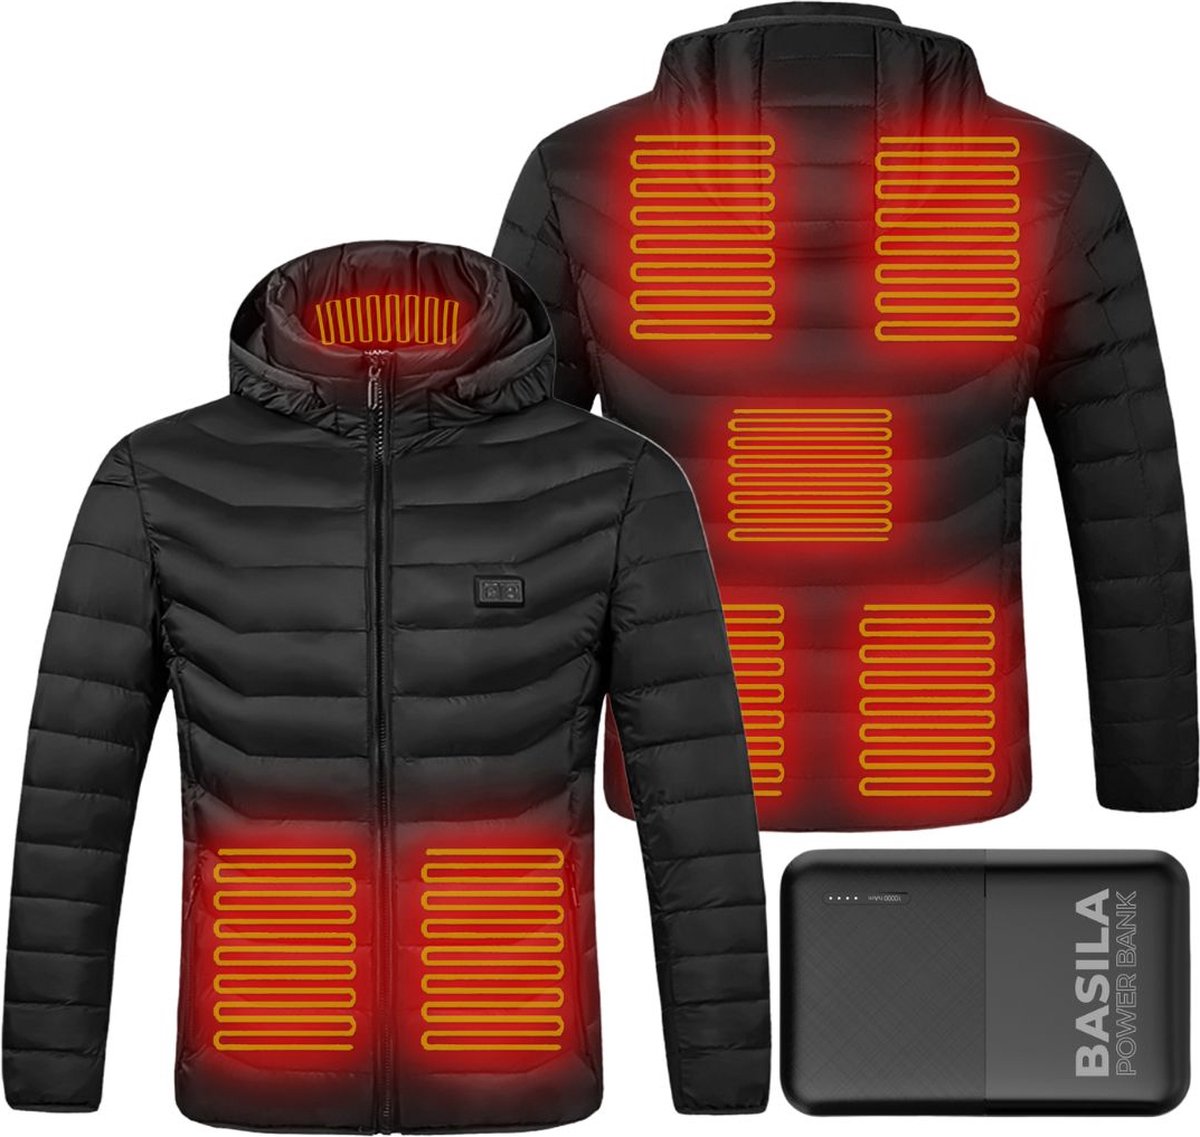 Basila® Verwarmde Jas met Powerbank - XL - 8 Zones - Thermo Kleding - Heating Jacket - Elektrische kleding - Thermo Jas - Verwarmde Kleding